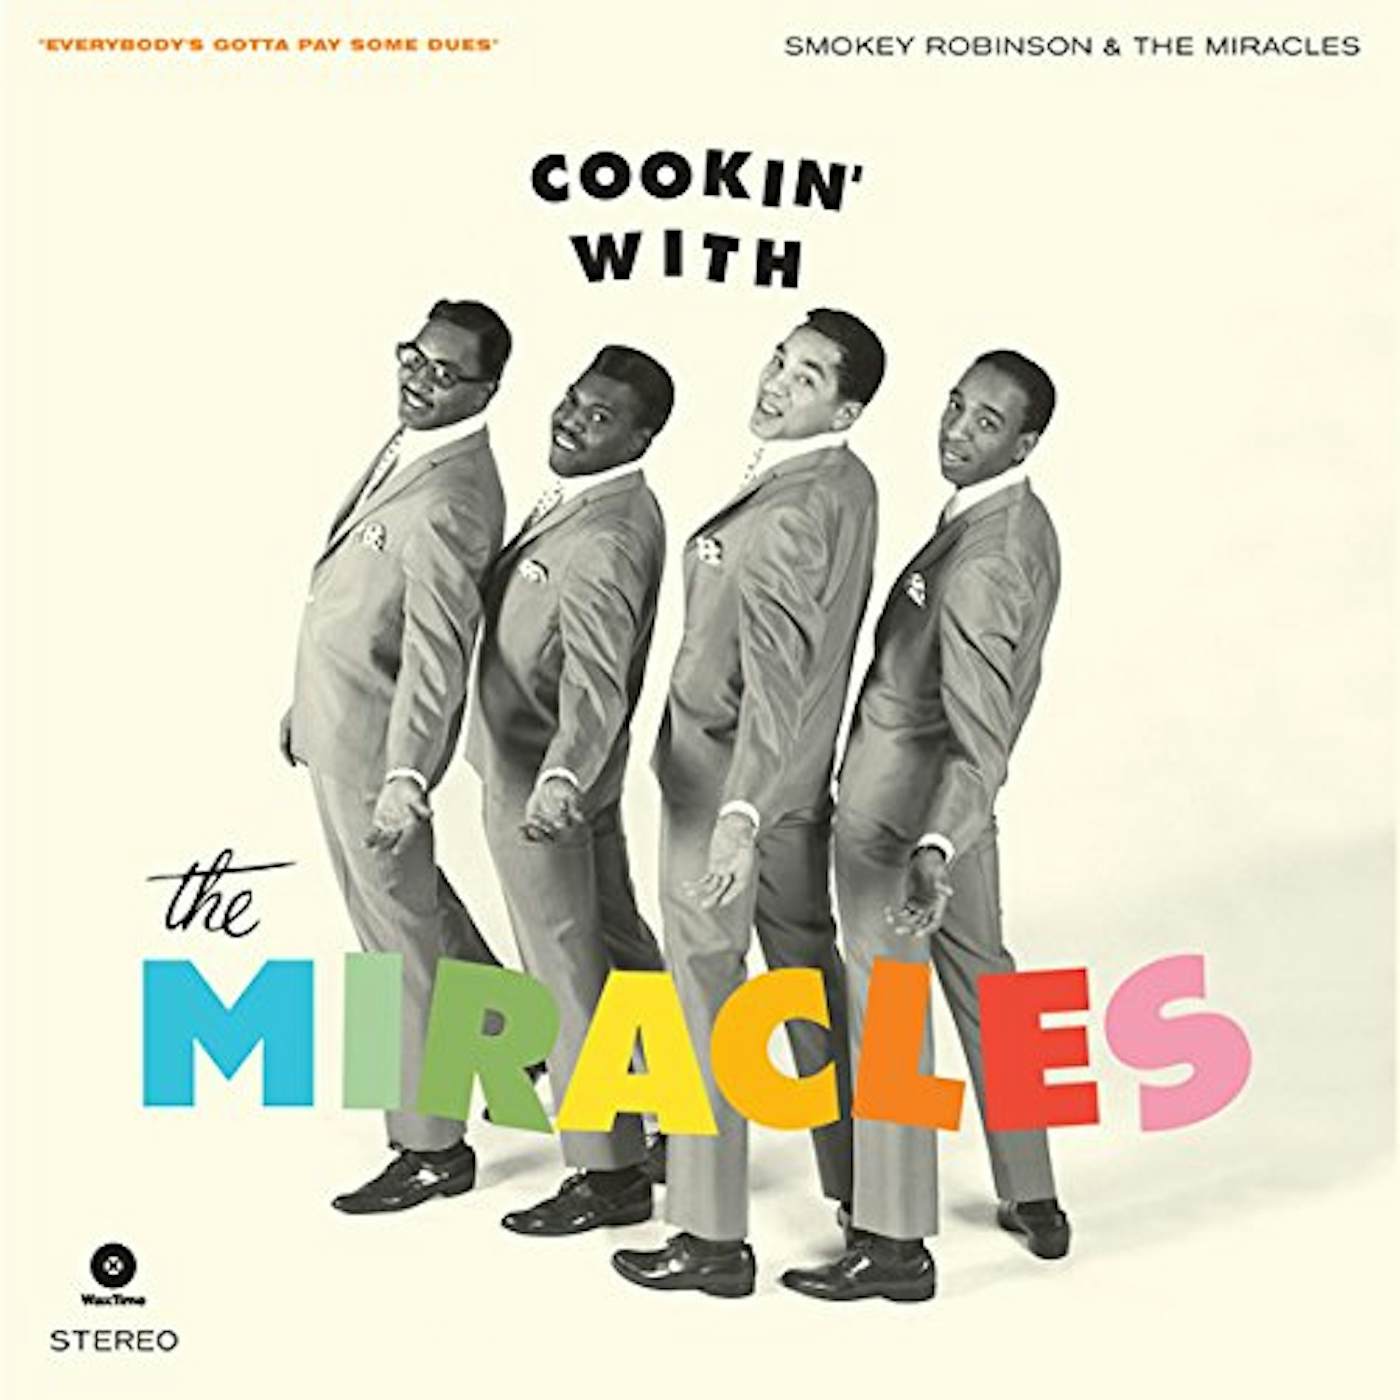 Smokey Robinson & The Miracles COOKIN WITH + 4 BONUS TRACKS (BONUS TRACKS) Vinyl Record - 180 Gram Pressing